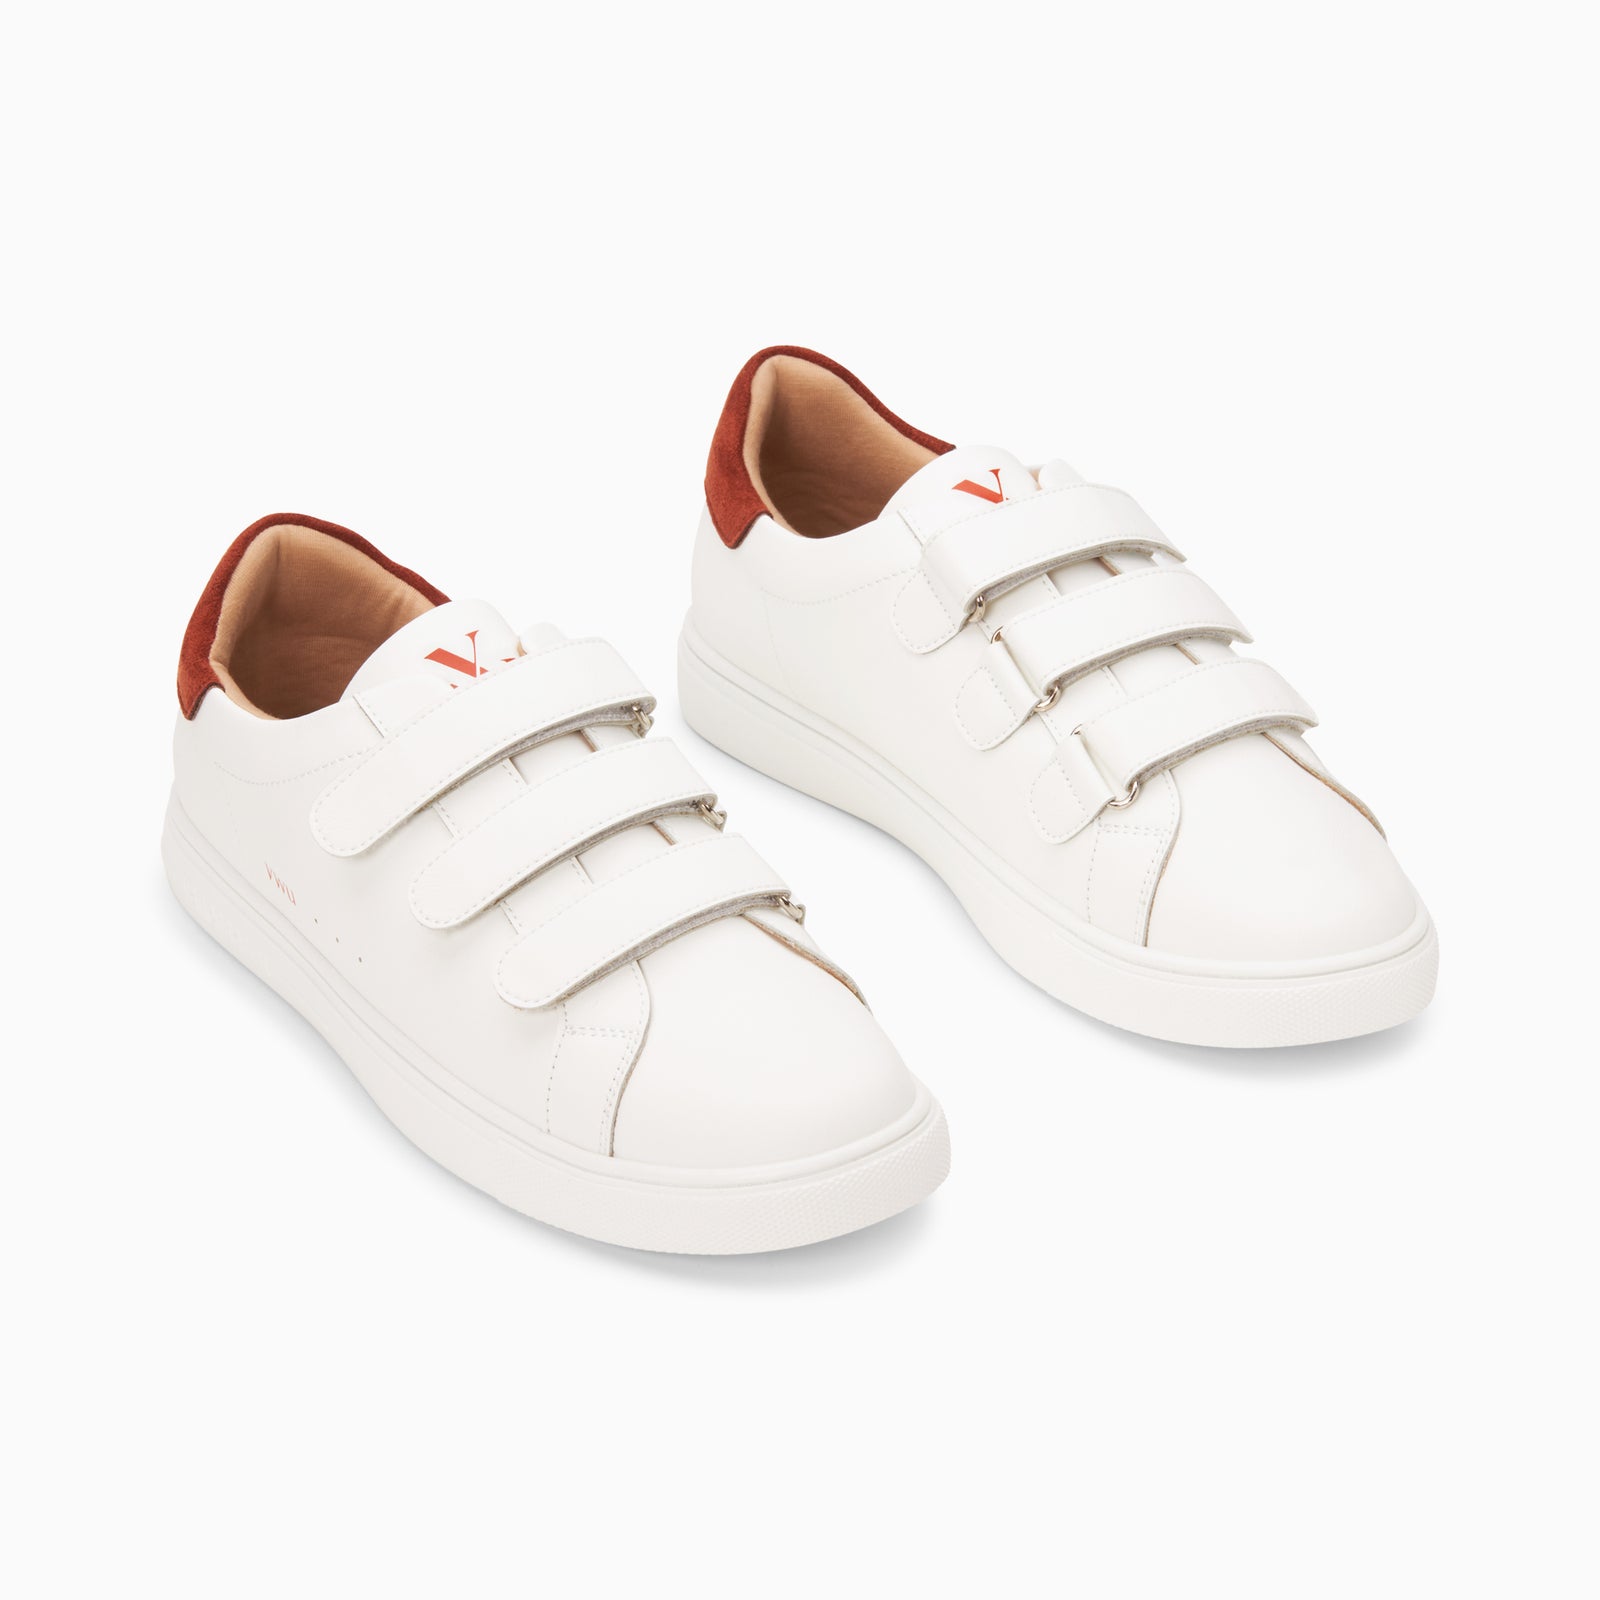 Uheoun Fournitures ménagères, Petites chaussures blanches